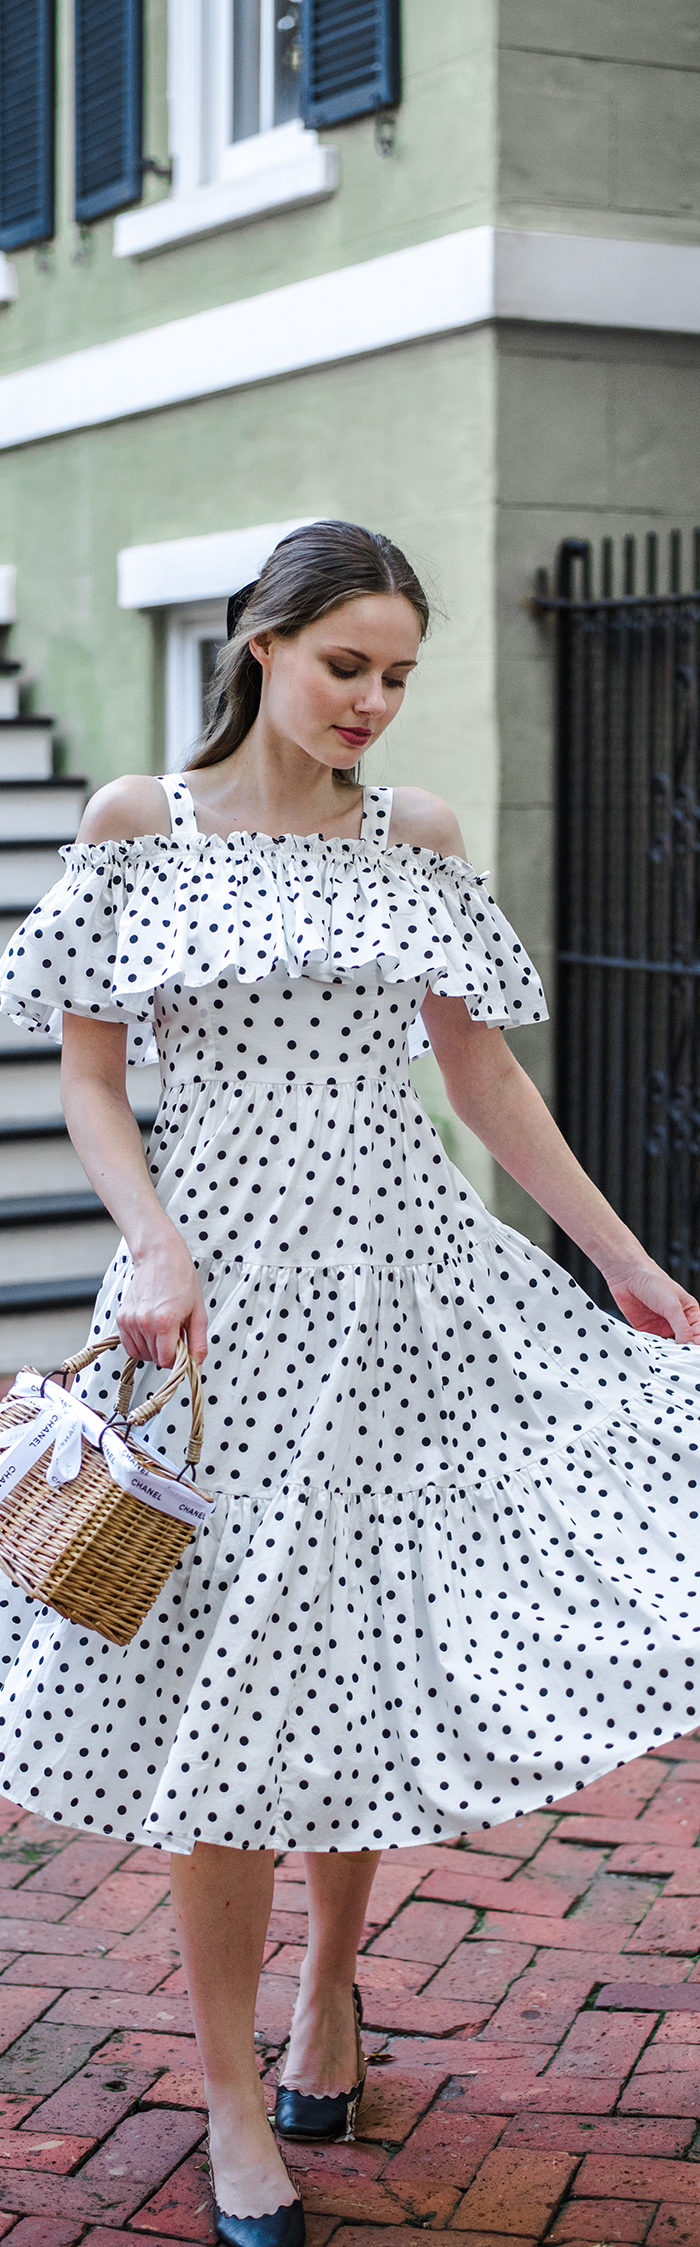 Alyssa Campanella of The A List blog visits Savannah, Georgia wearing Stylekeepers Girl Next Door polka dot dress